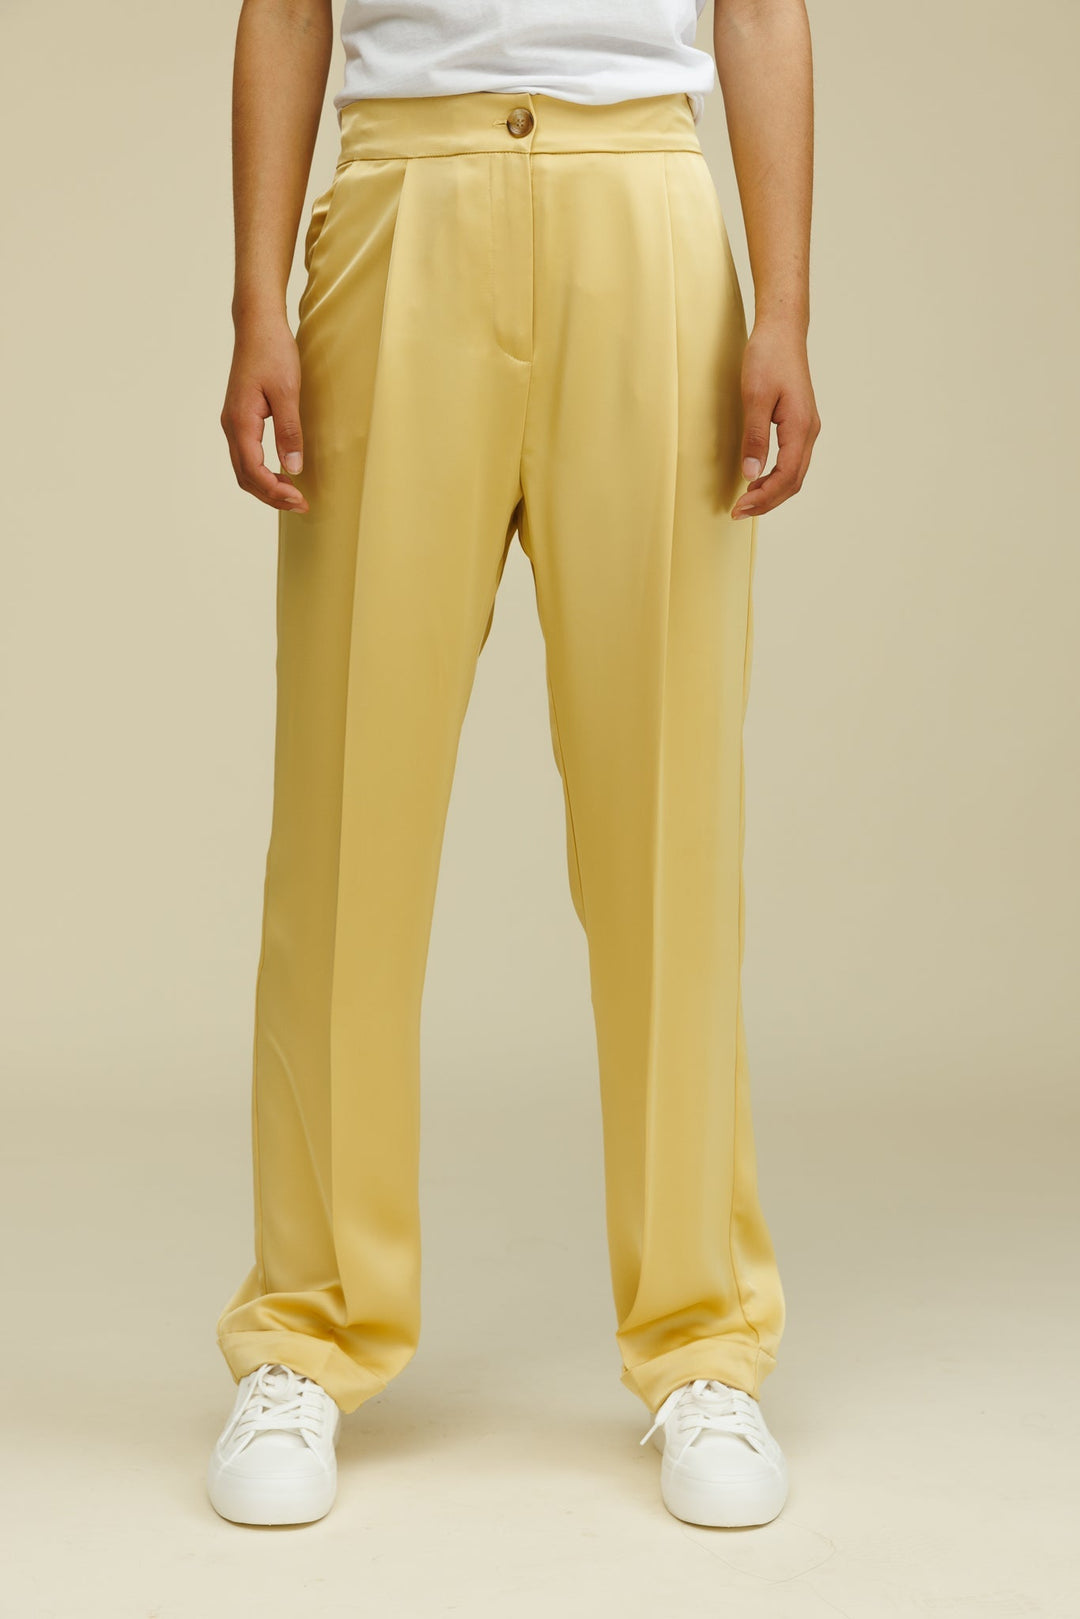 Pants gold-yellow